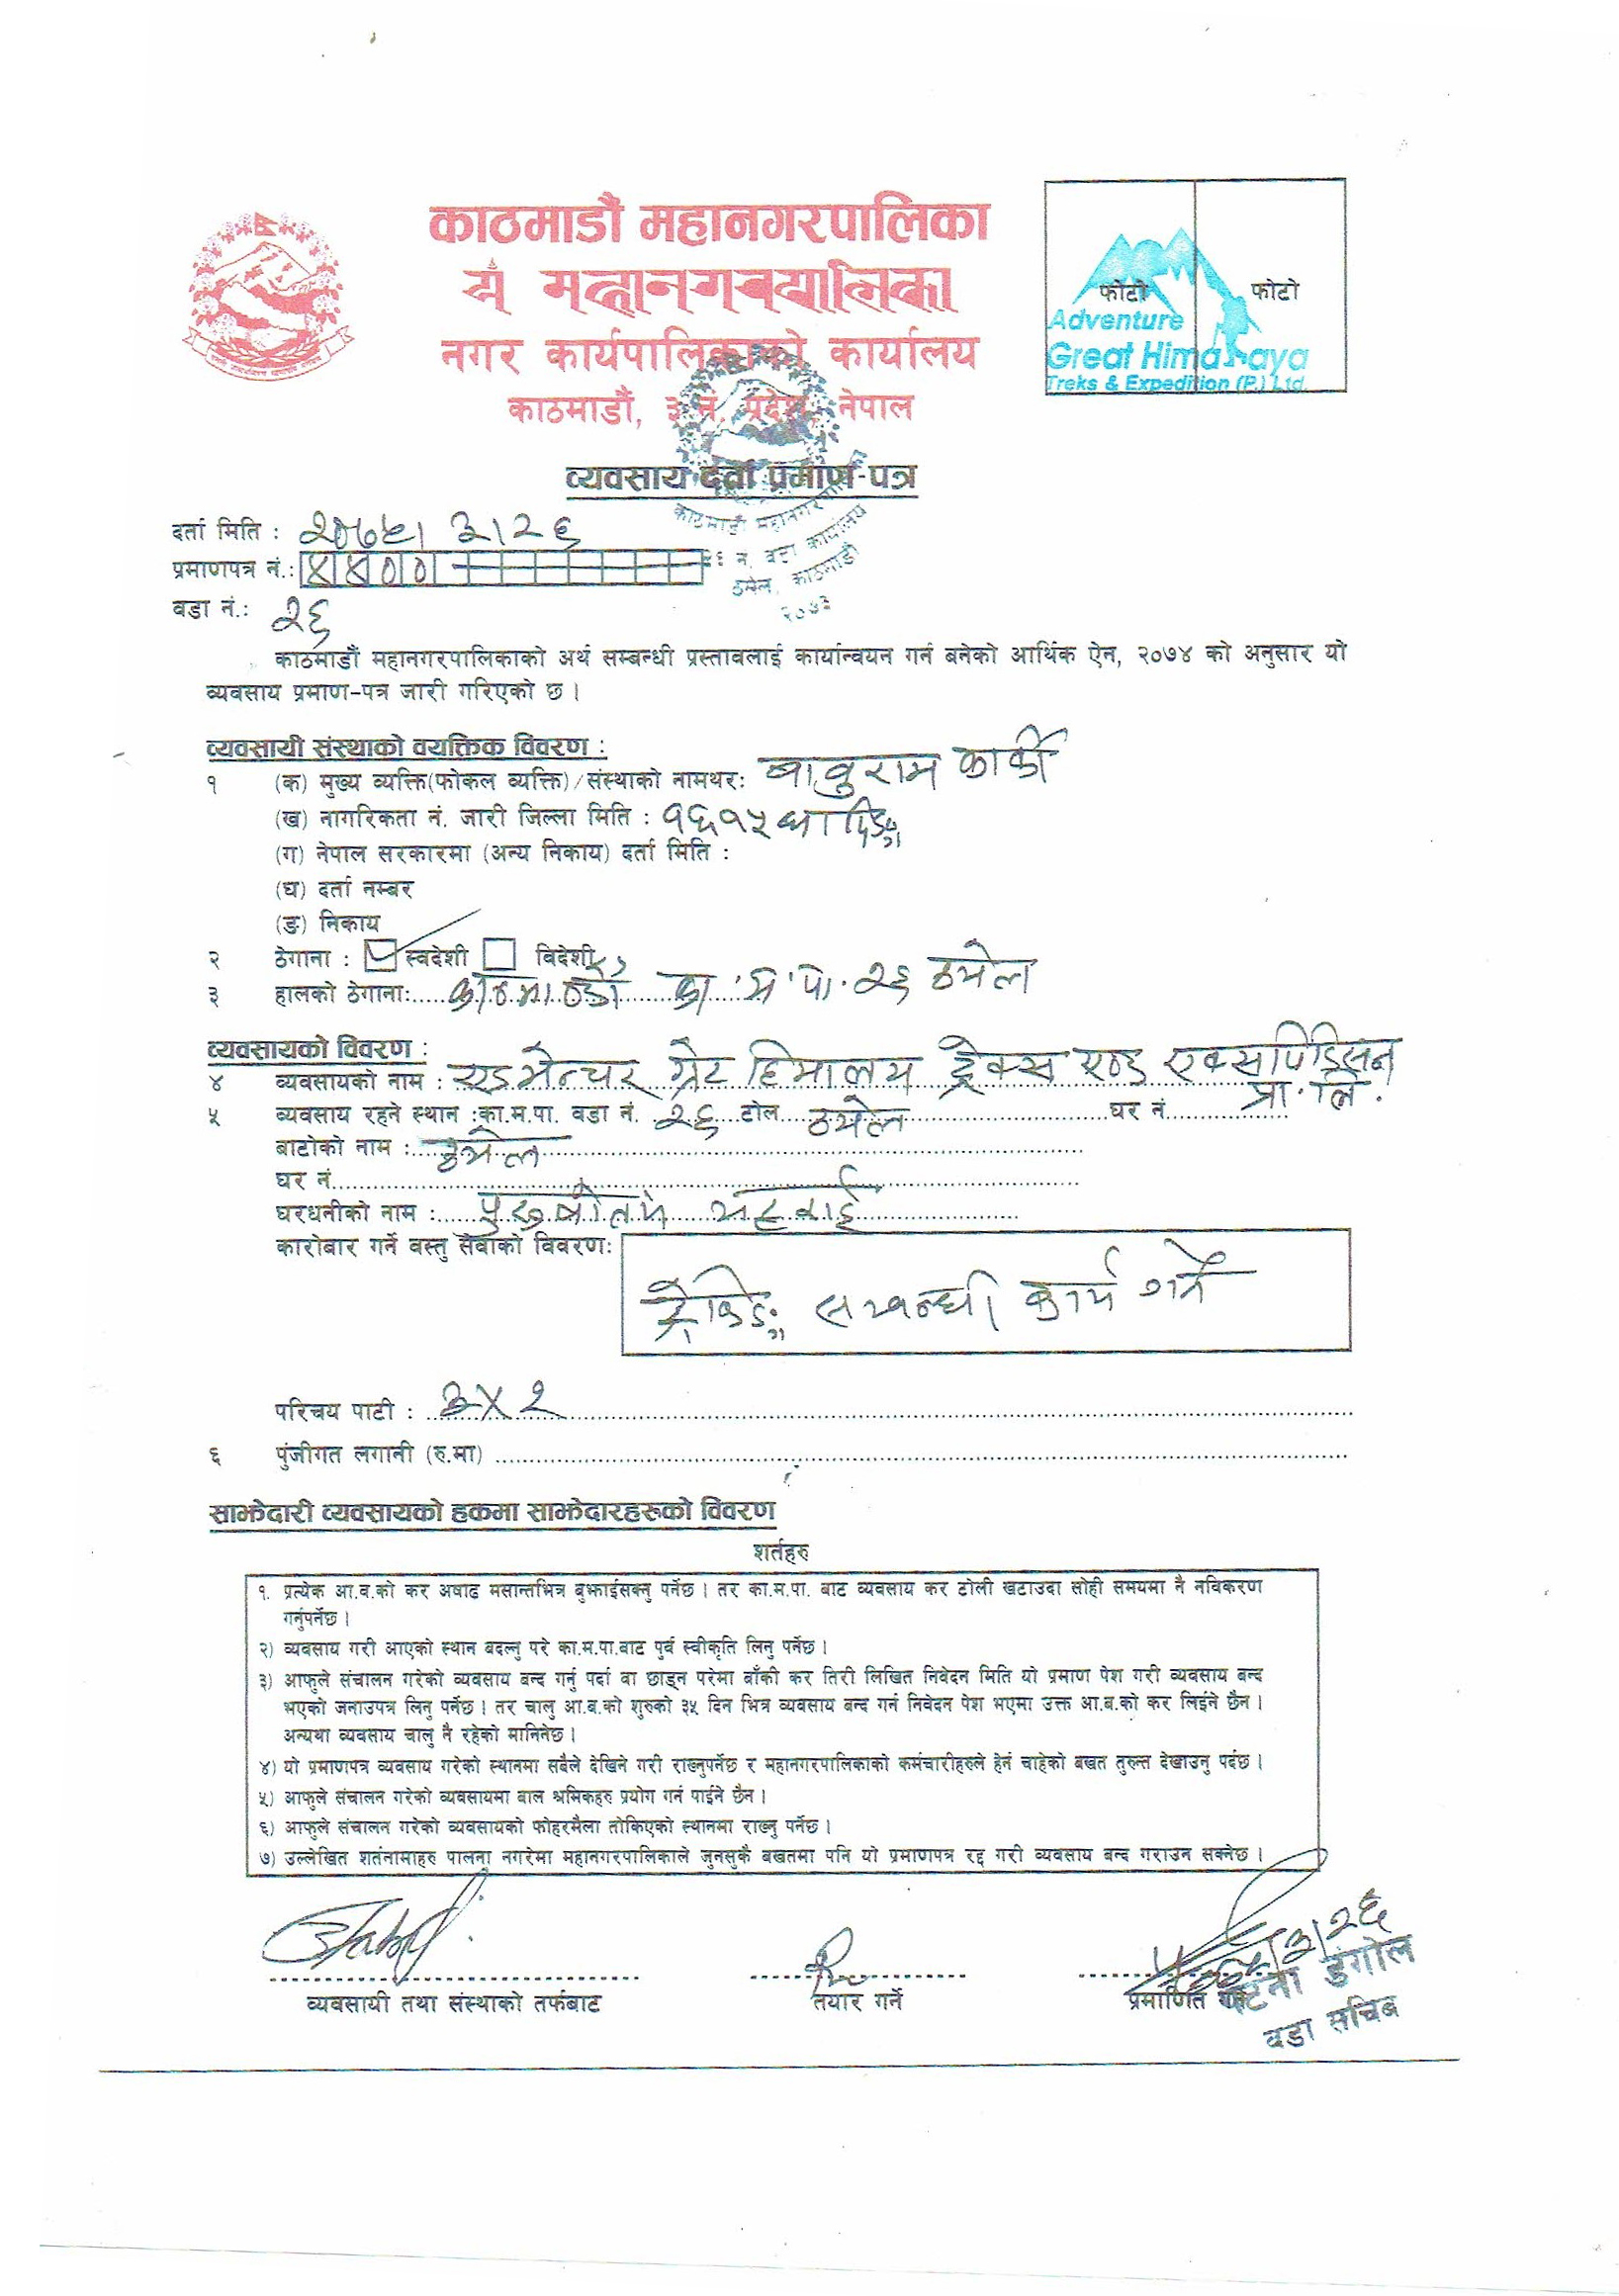 Kathmandu Metropolitan Registration 